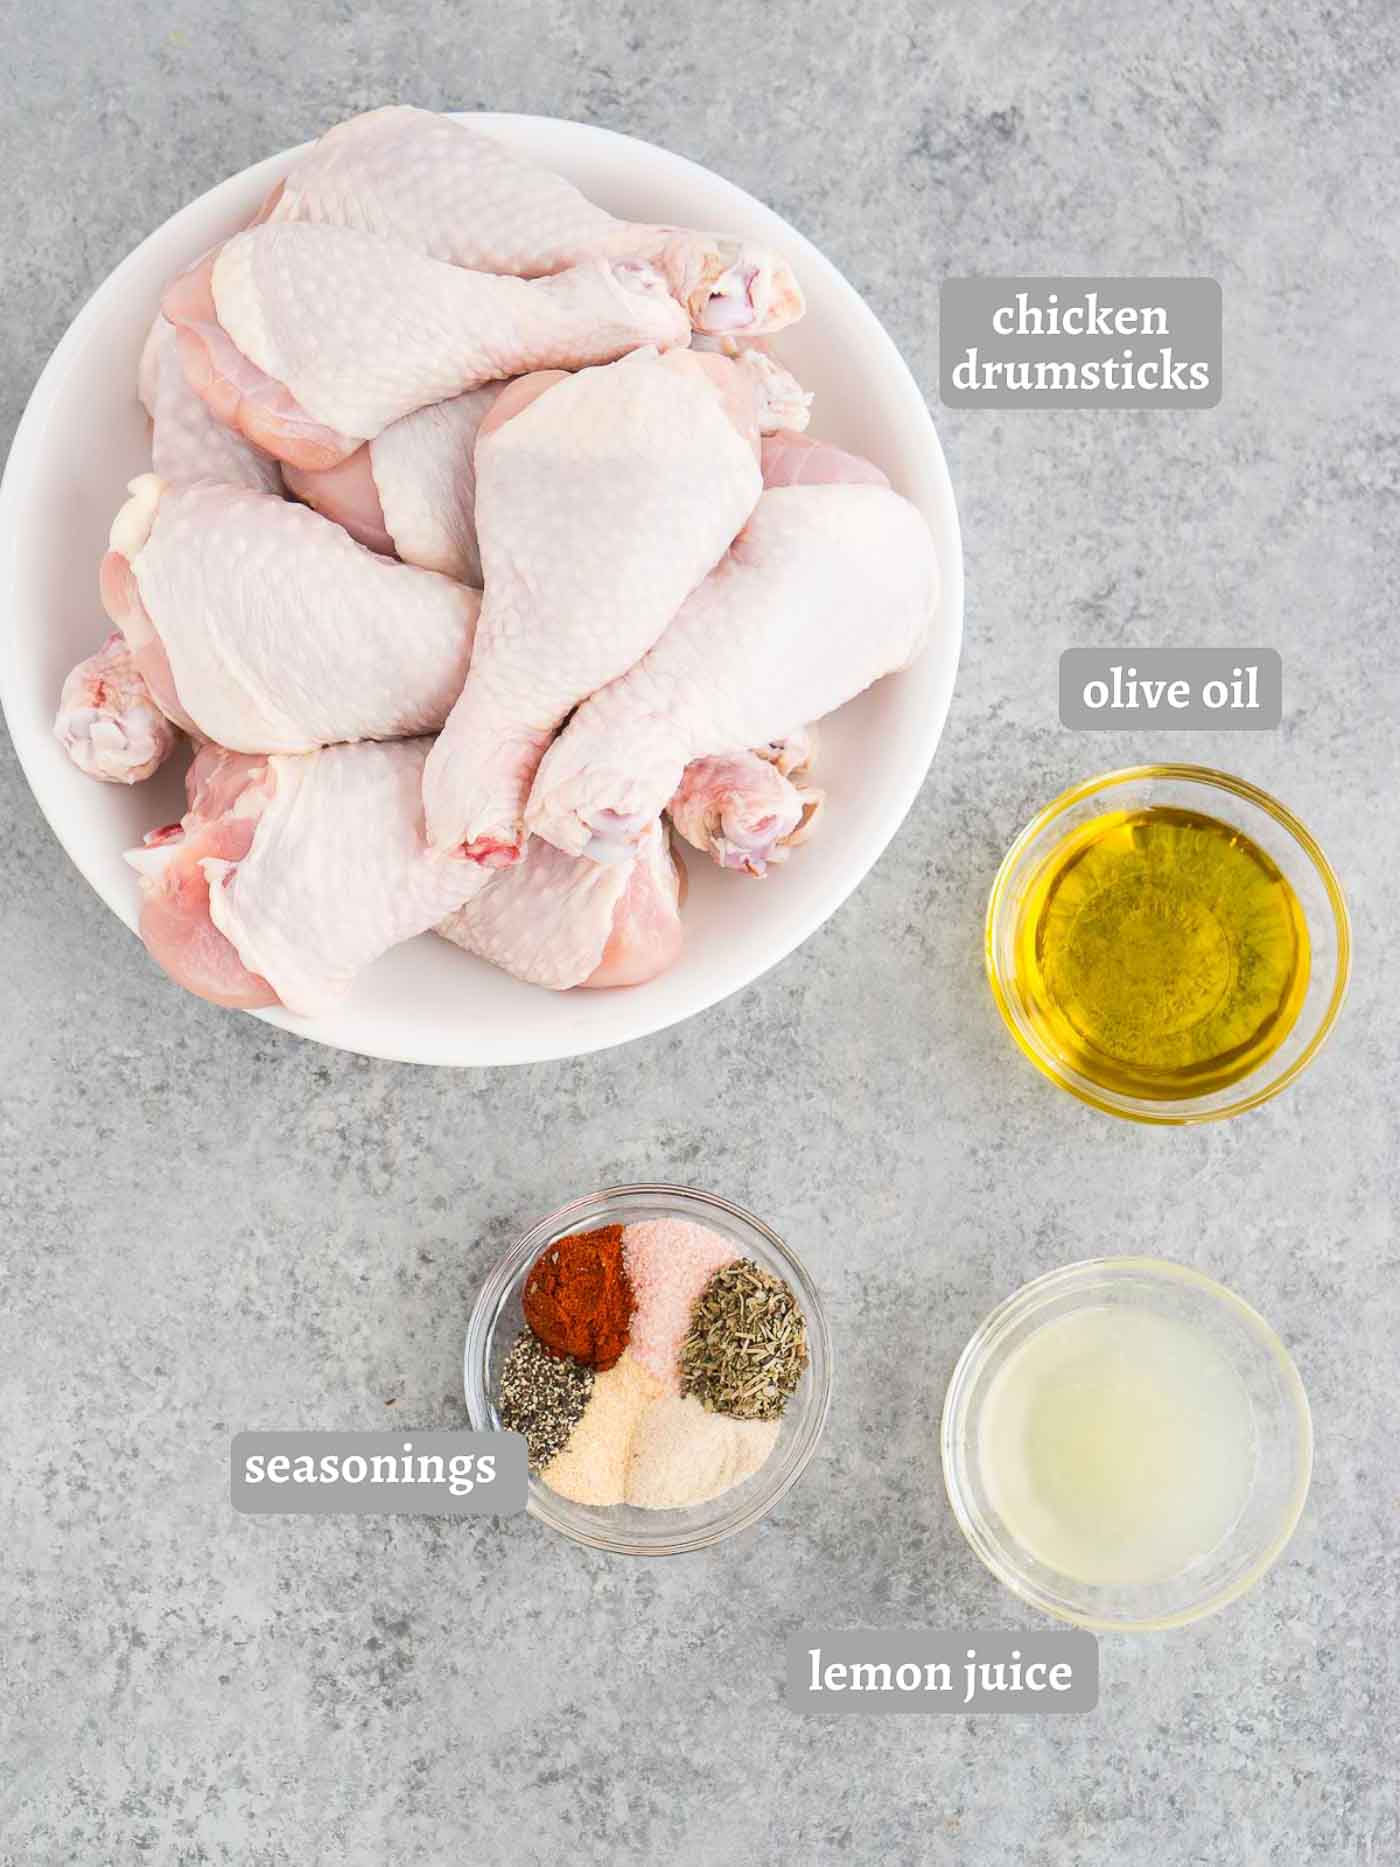 chicken and marinade ingredients